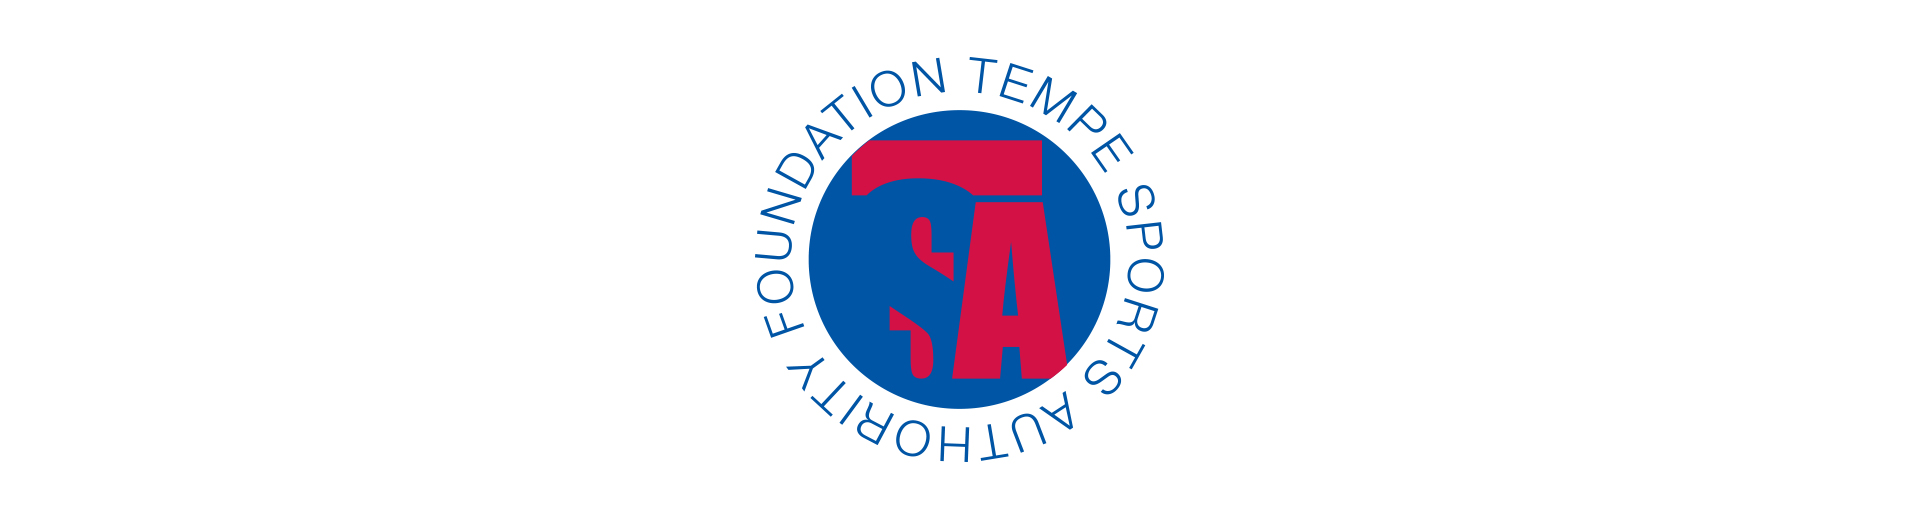 Tempe Sports Authority Foundation Logo Design